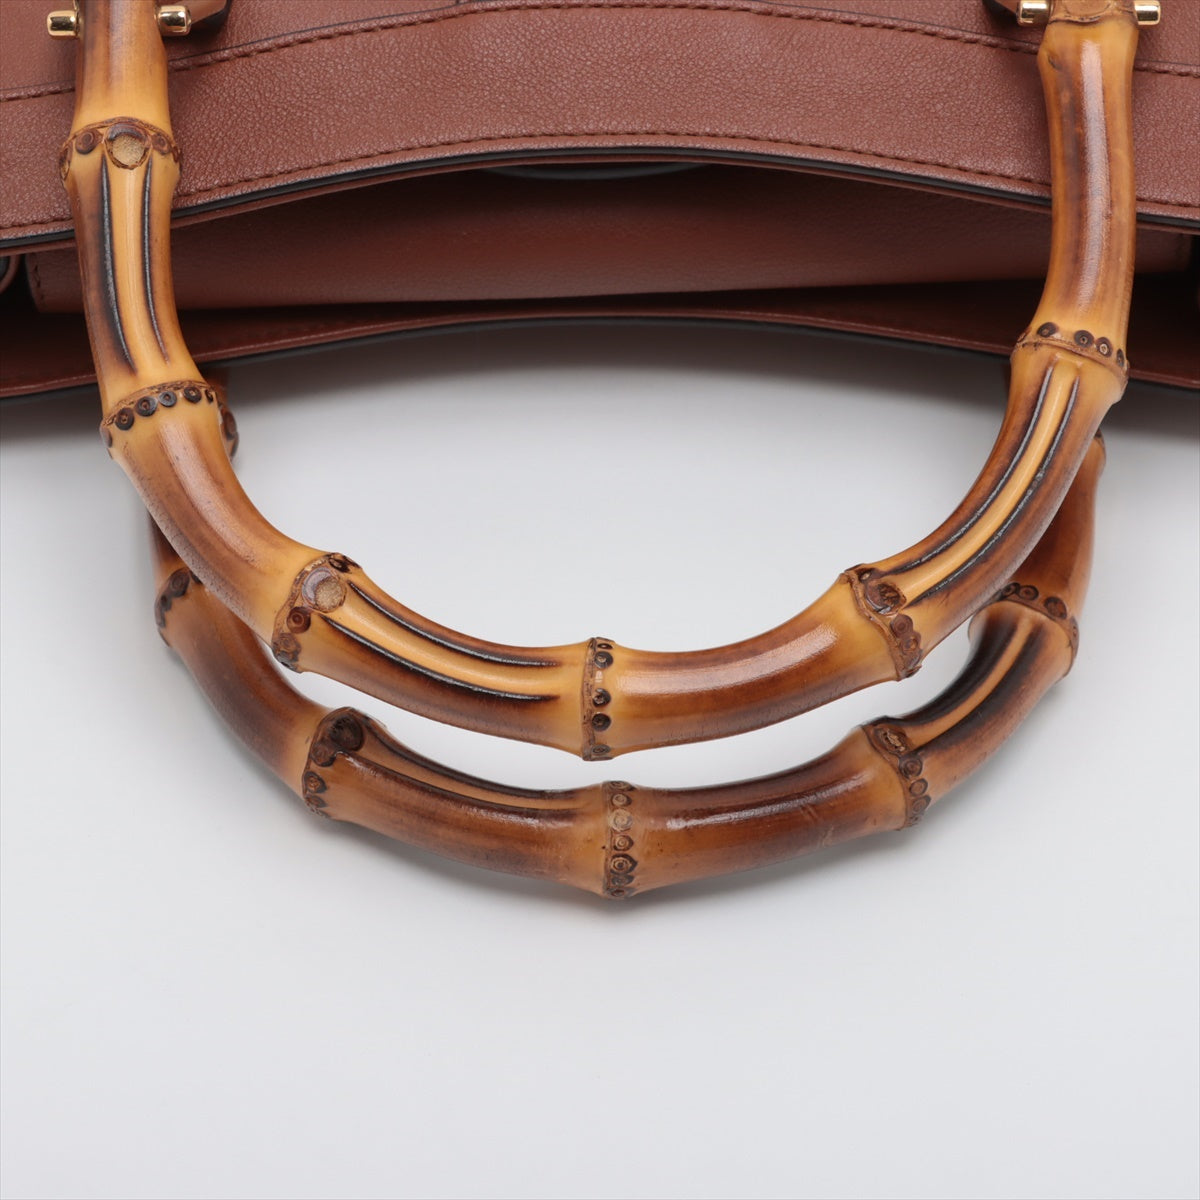 Gucci Bamboo Diana Leather 2 Way Handbag Brown 655658